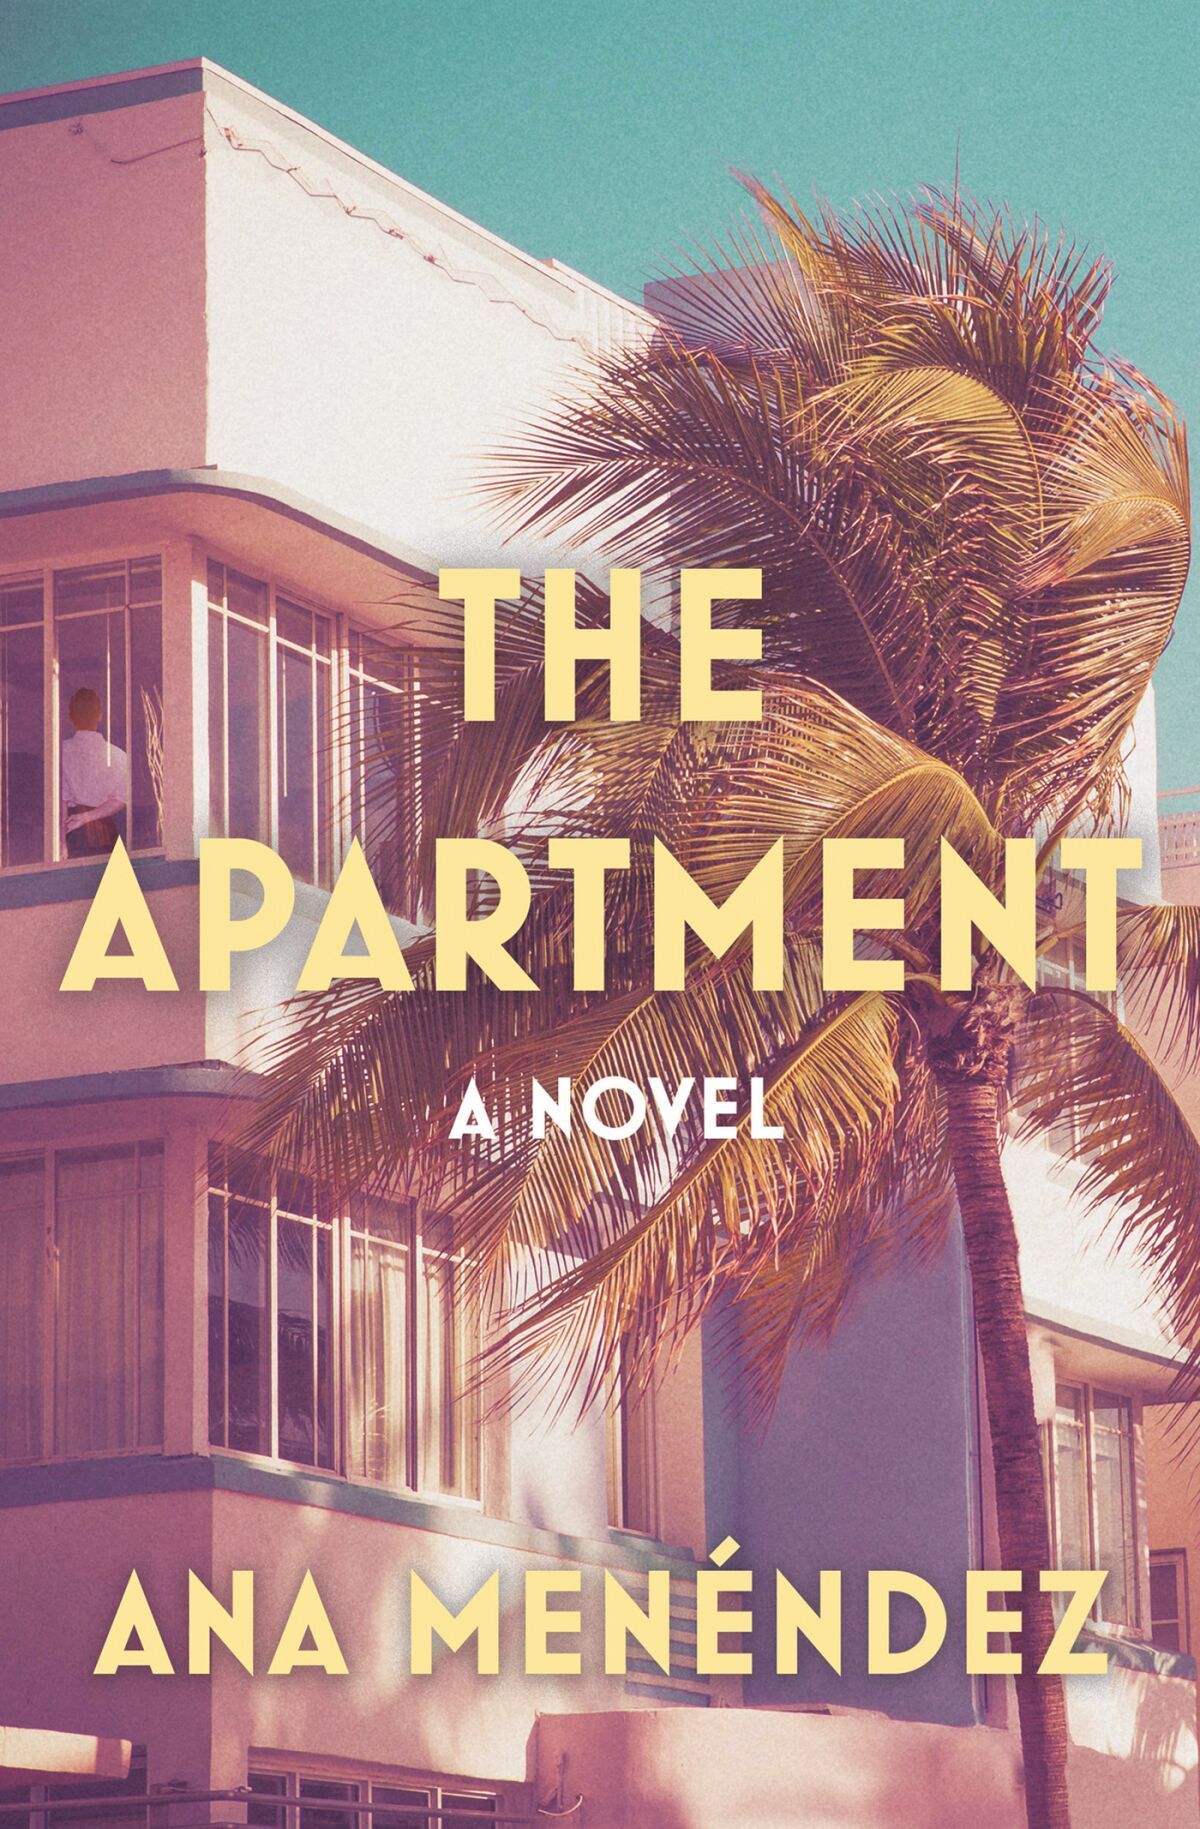 2B or Not 2B?: On Ana Menéndez’s “The Apartment”